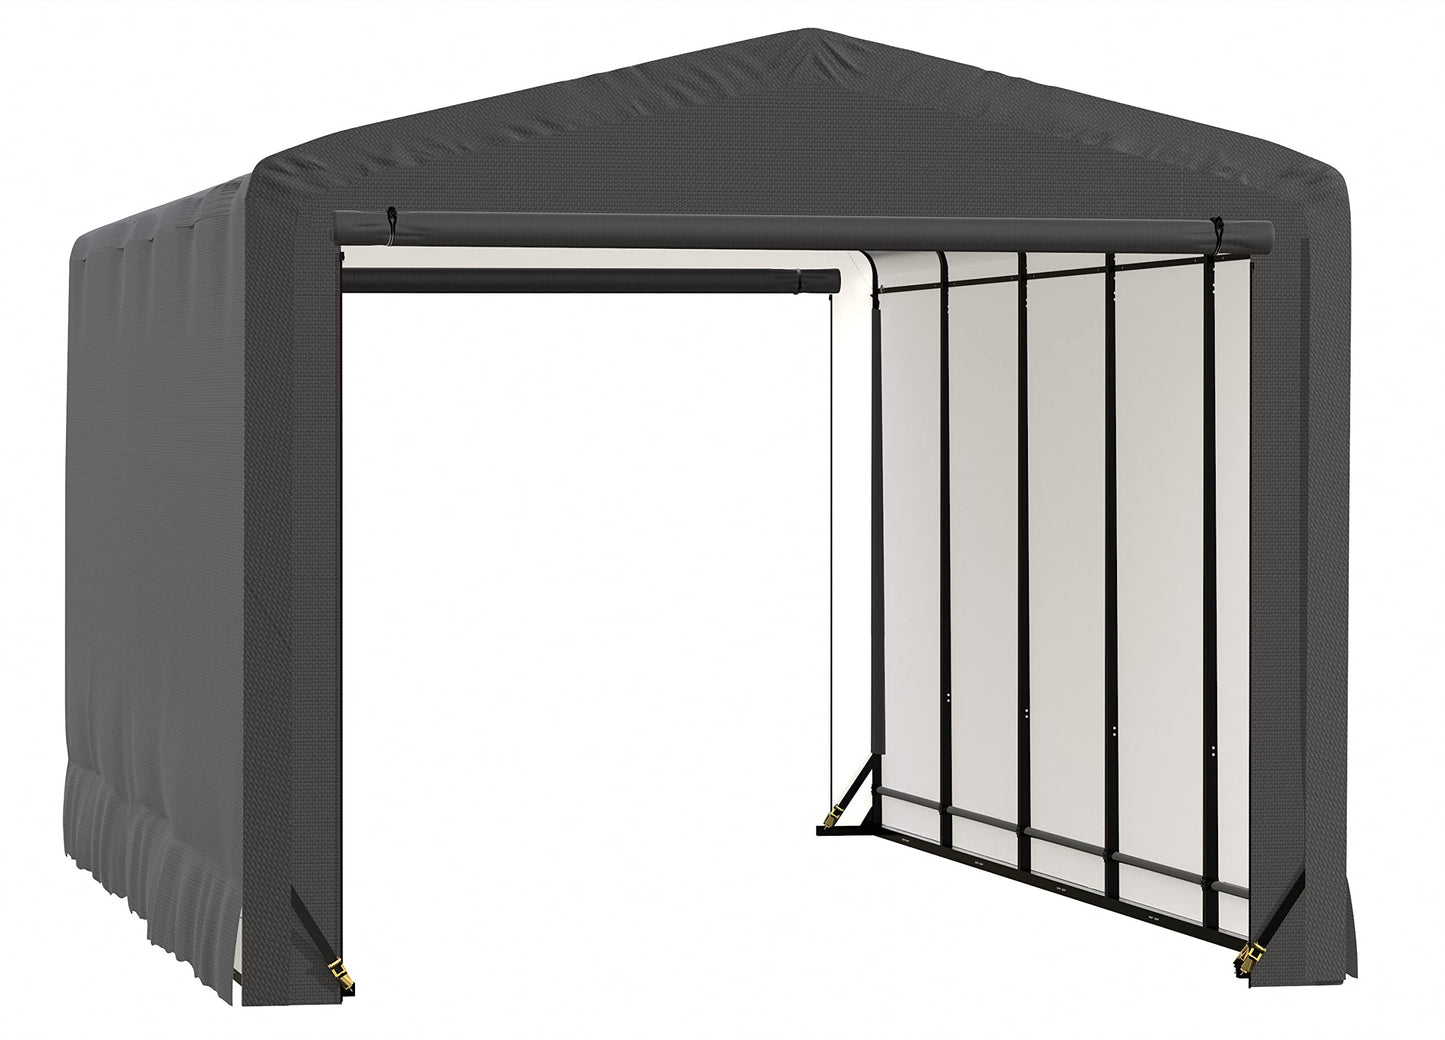 ShelterLogic ShelterTube Garage & Storage Shelter, 12' x 23' x 10' Heavy-Duty Steel Frame Wind and Snow-Load Rated Enclosure, Gray 12' x 23' x 10'